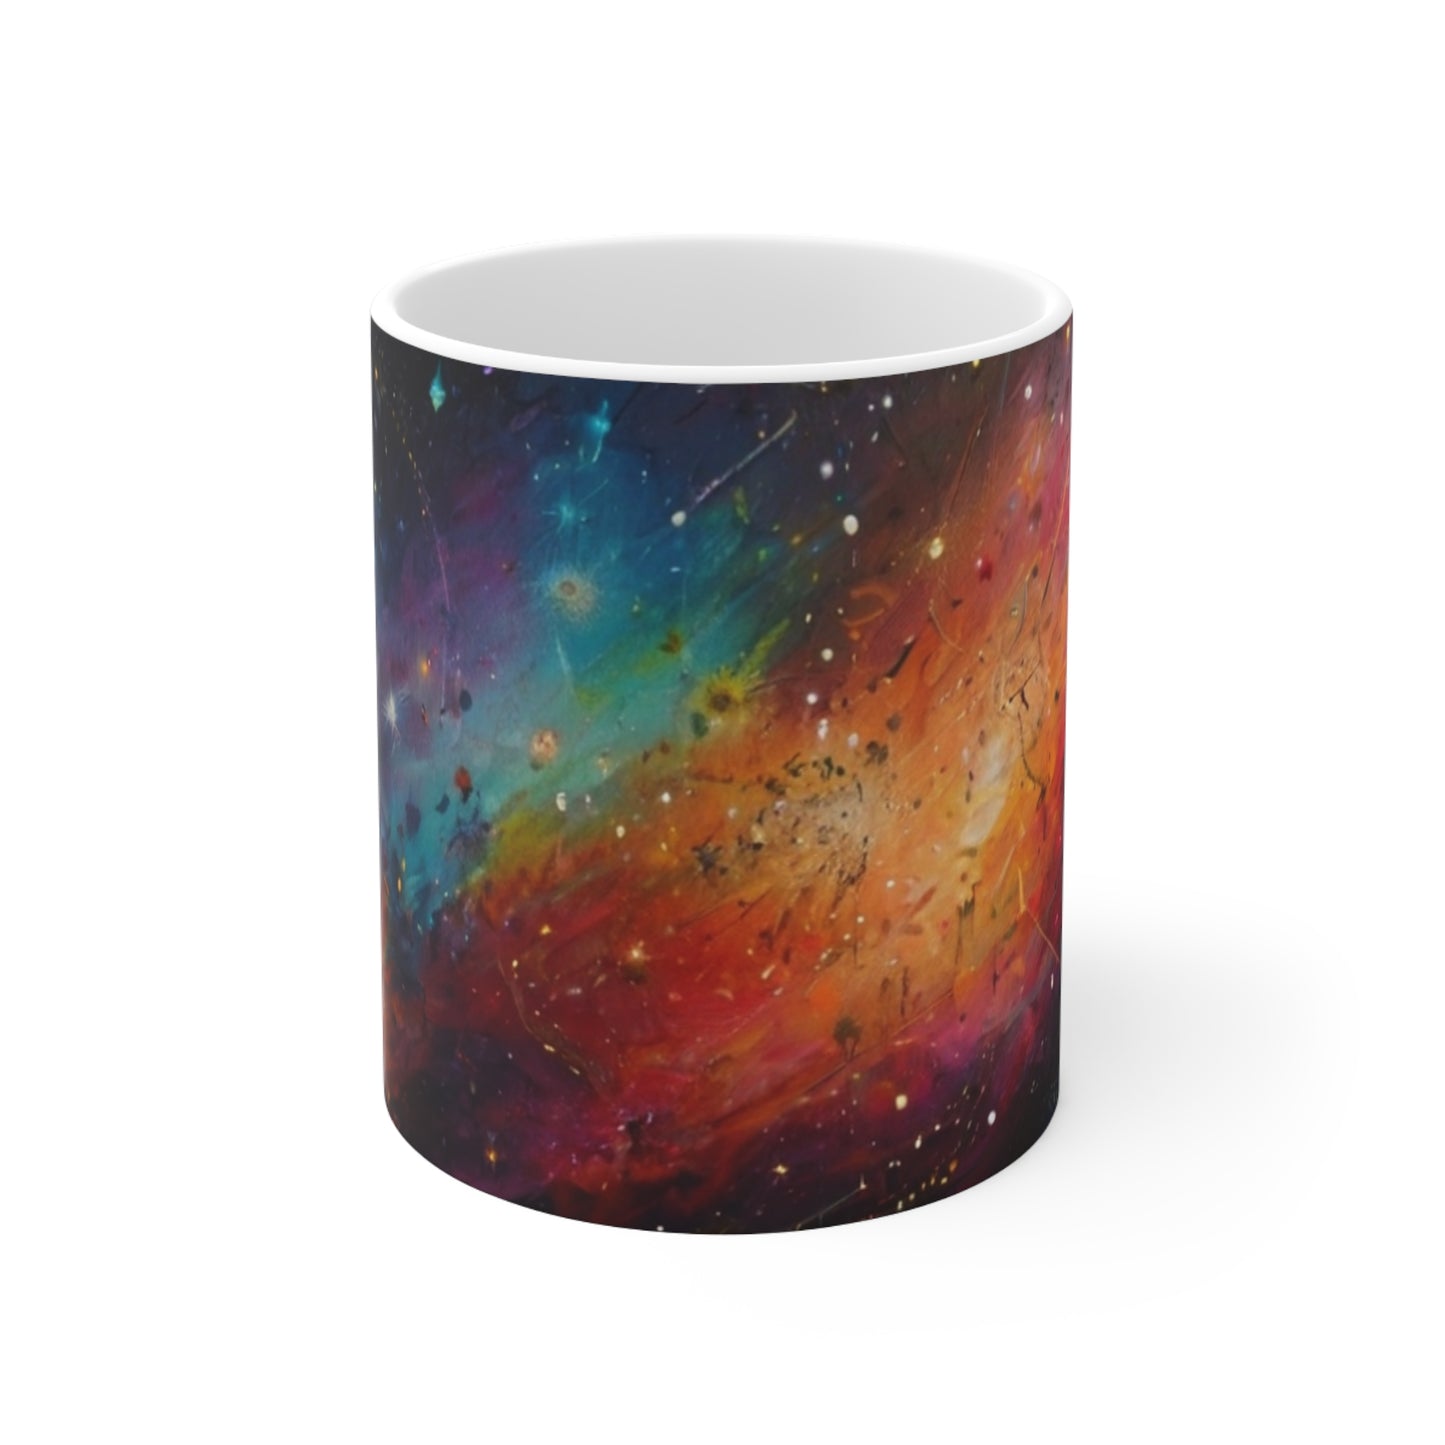 Colourful Constellations Mug - Ceramic Coffee Mug 11oz